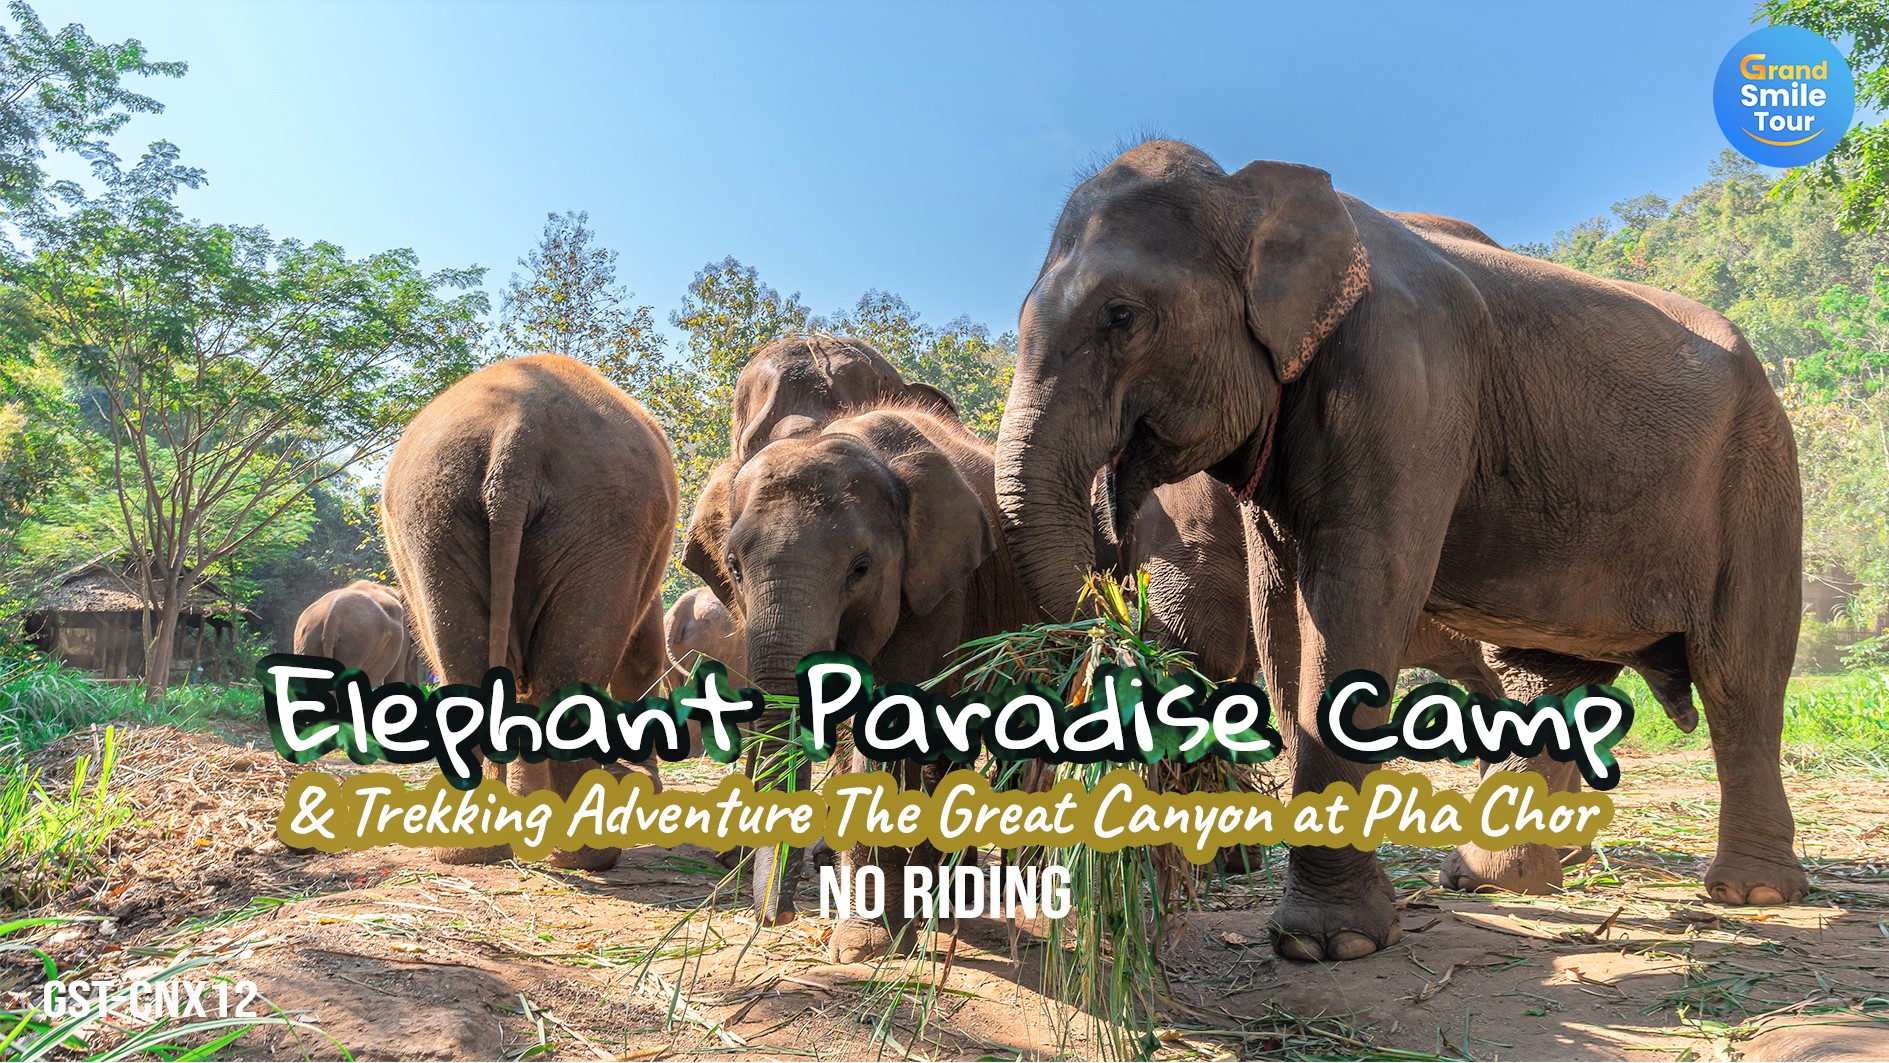 GST-CNX12 Full Day Elephant Paradise Camp & Trekking at PhaChor